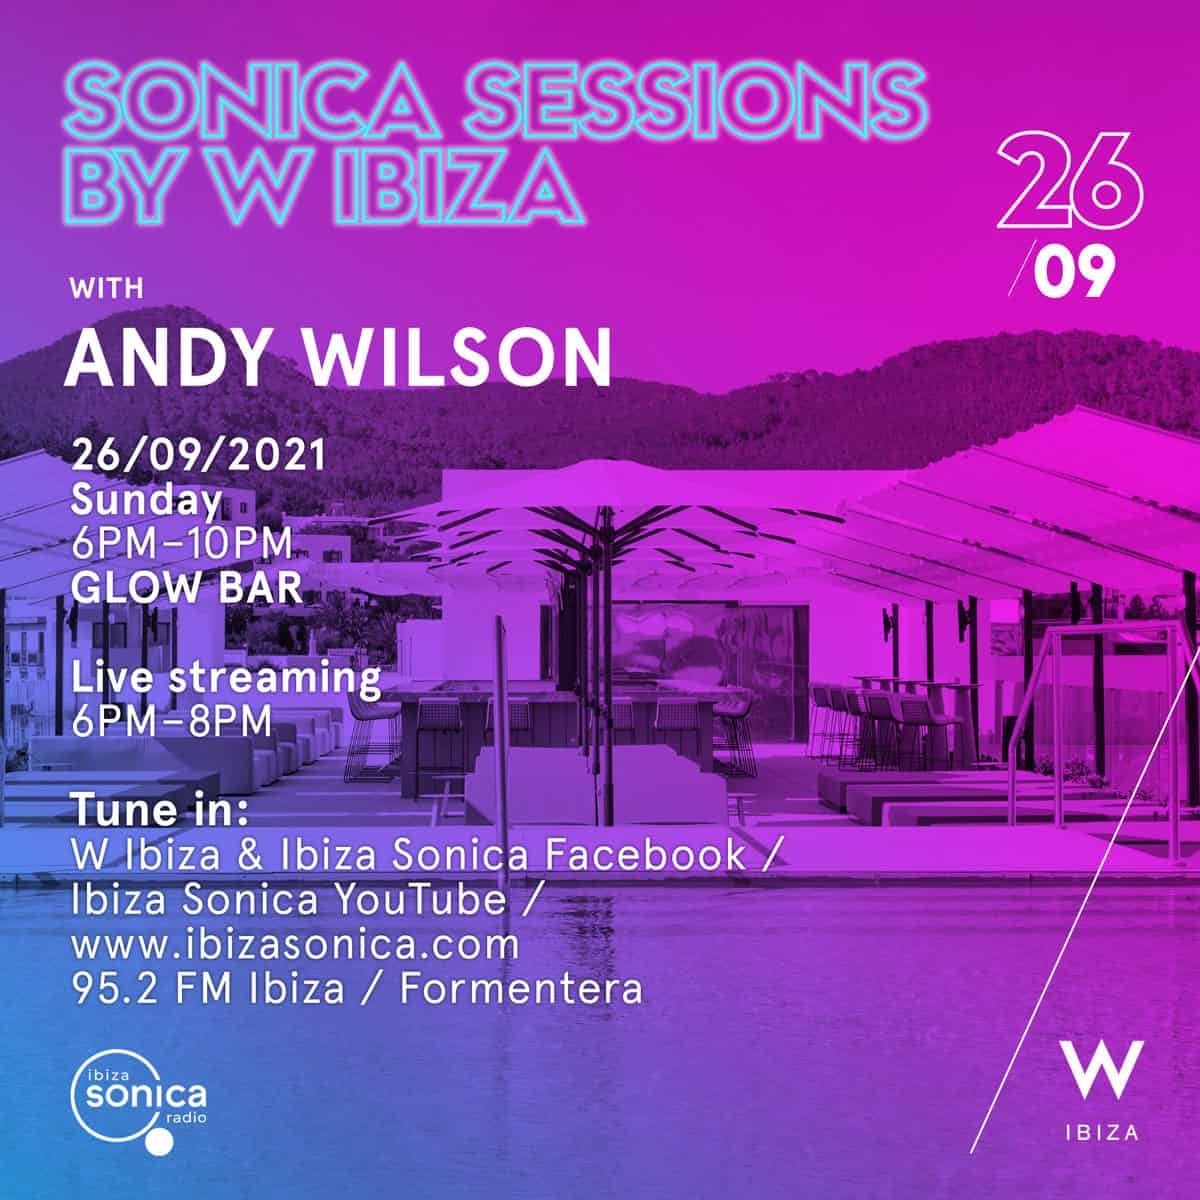 sonica-sessions-w-ibiza-2021-andy-wilson-welcometoibiza